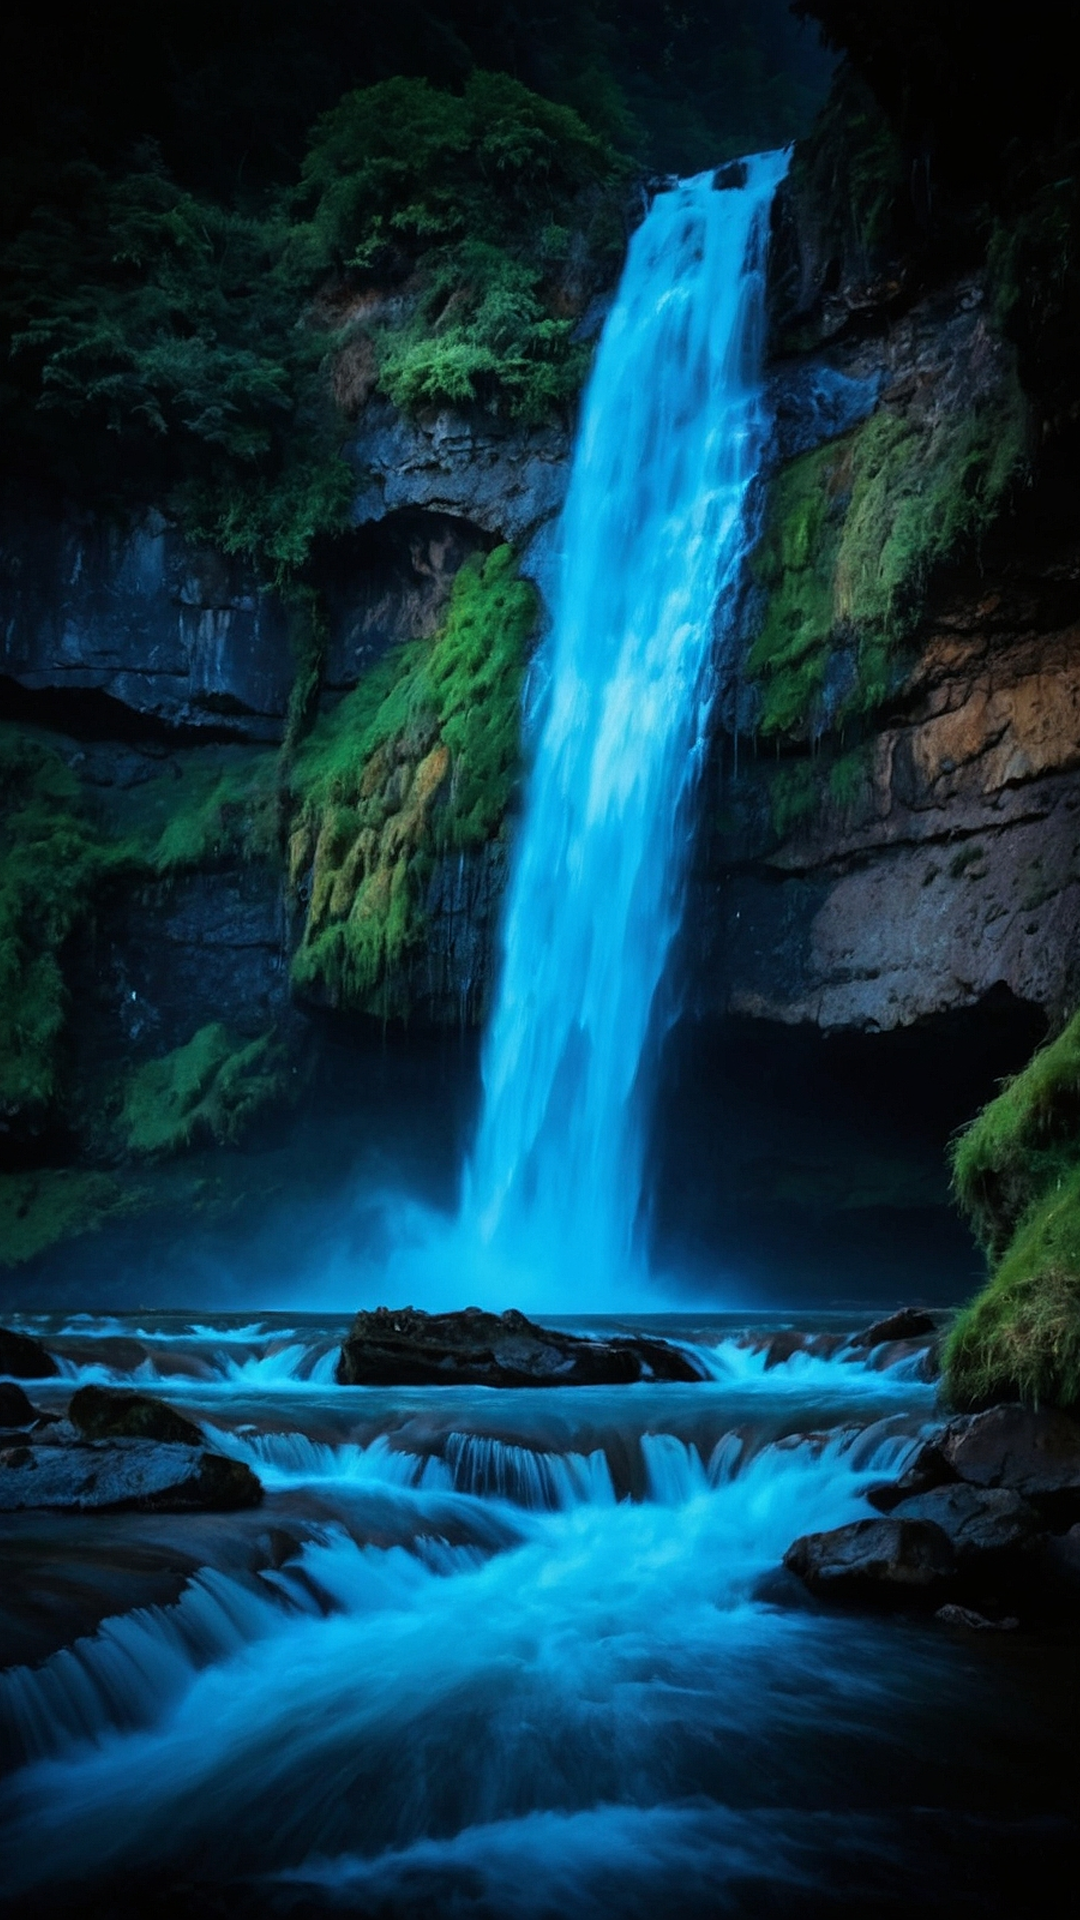 Tumbling Waters: Dynamic Waterfall Wallpaper Showcases